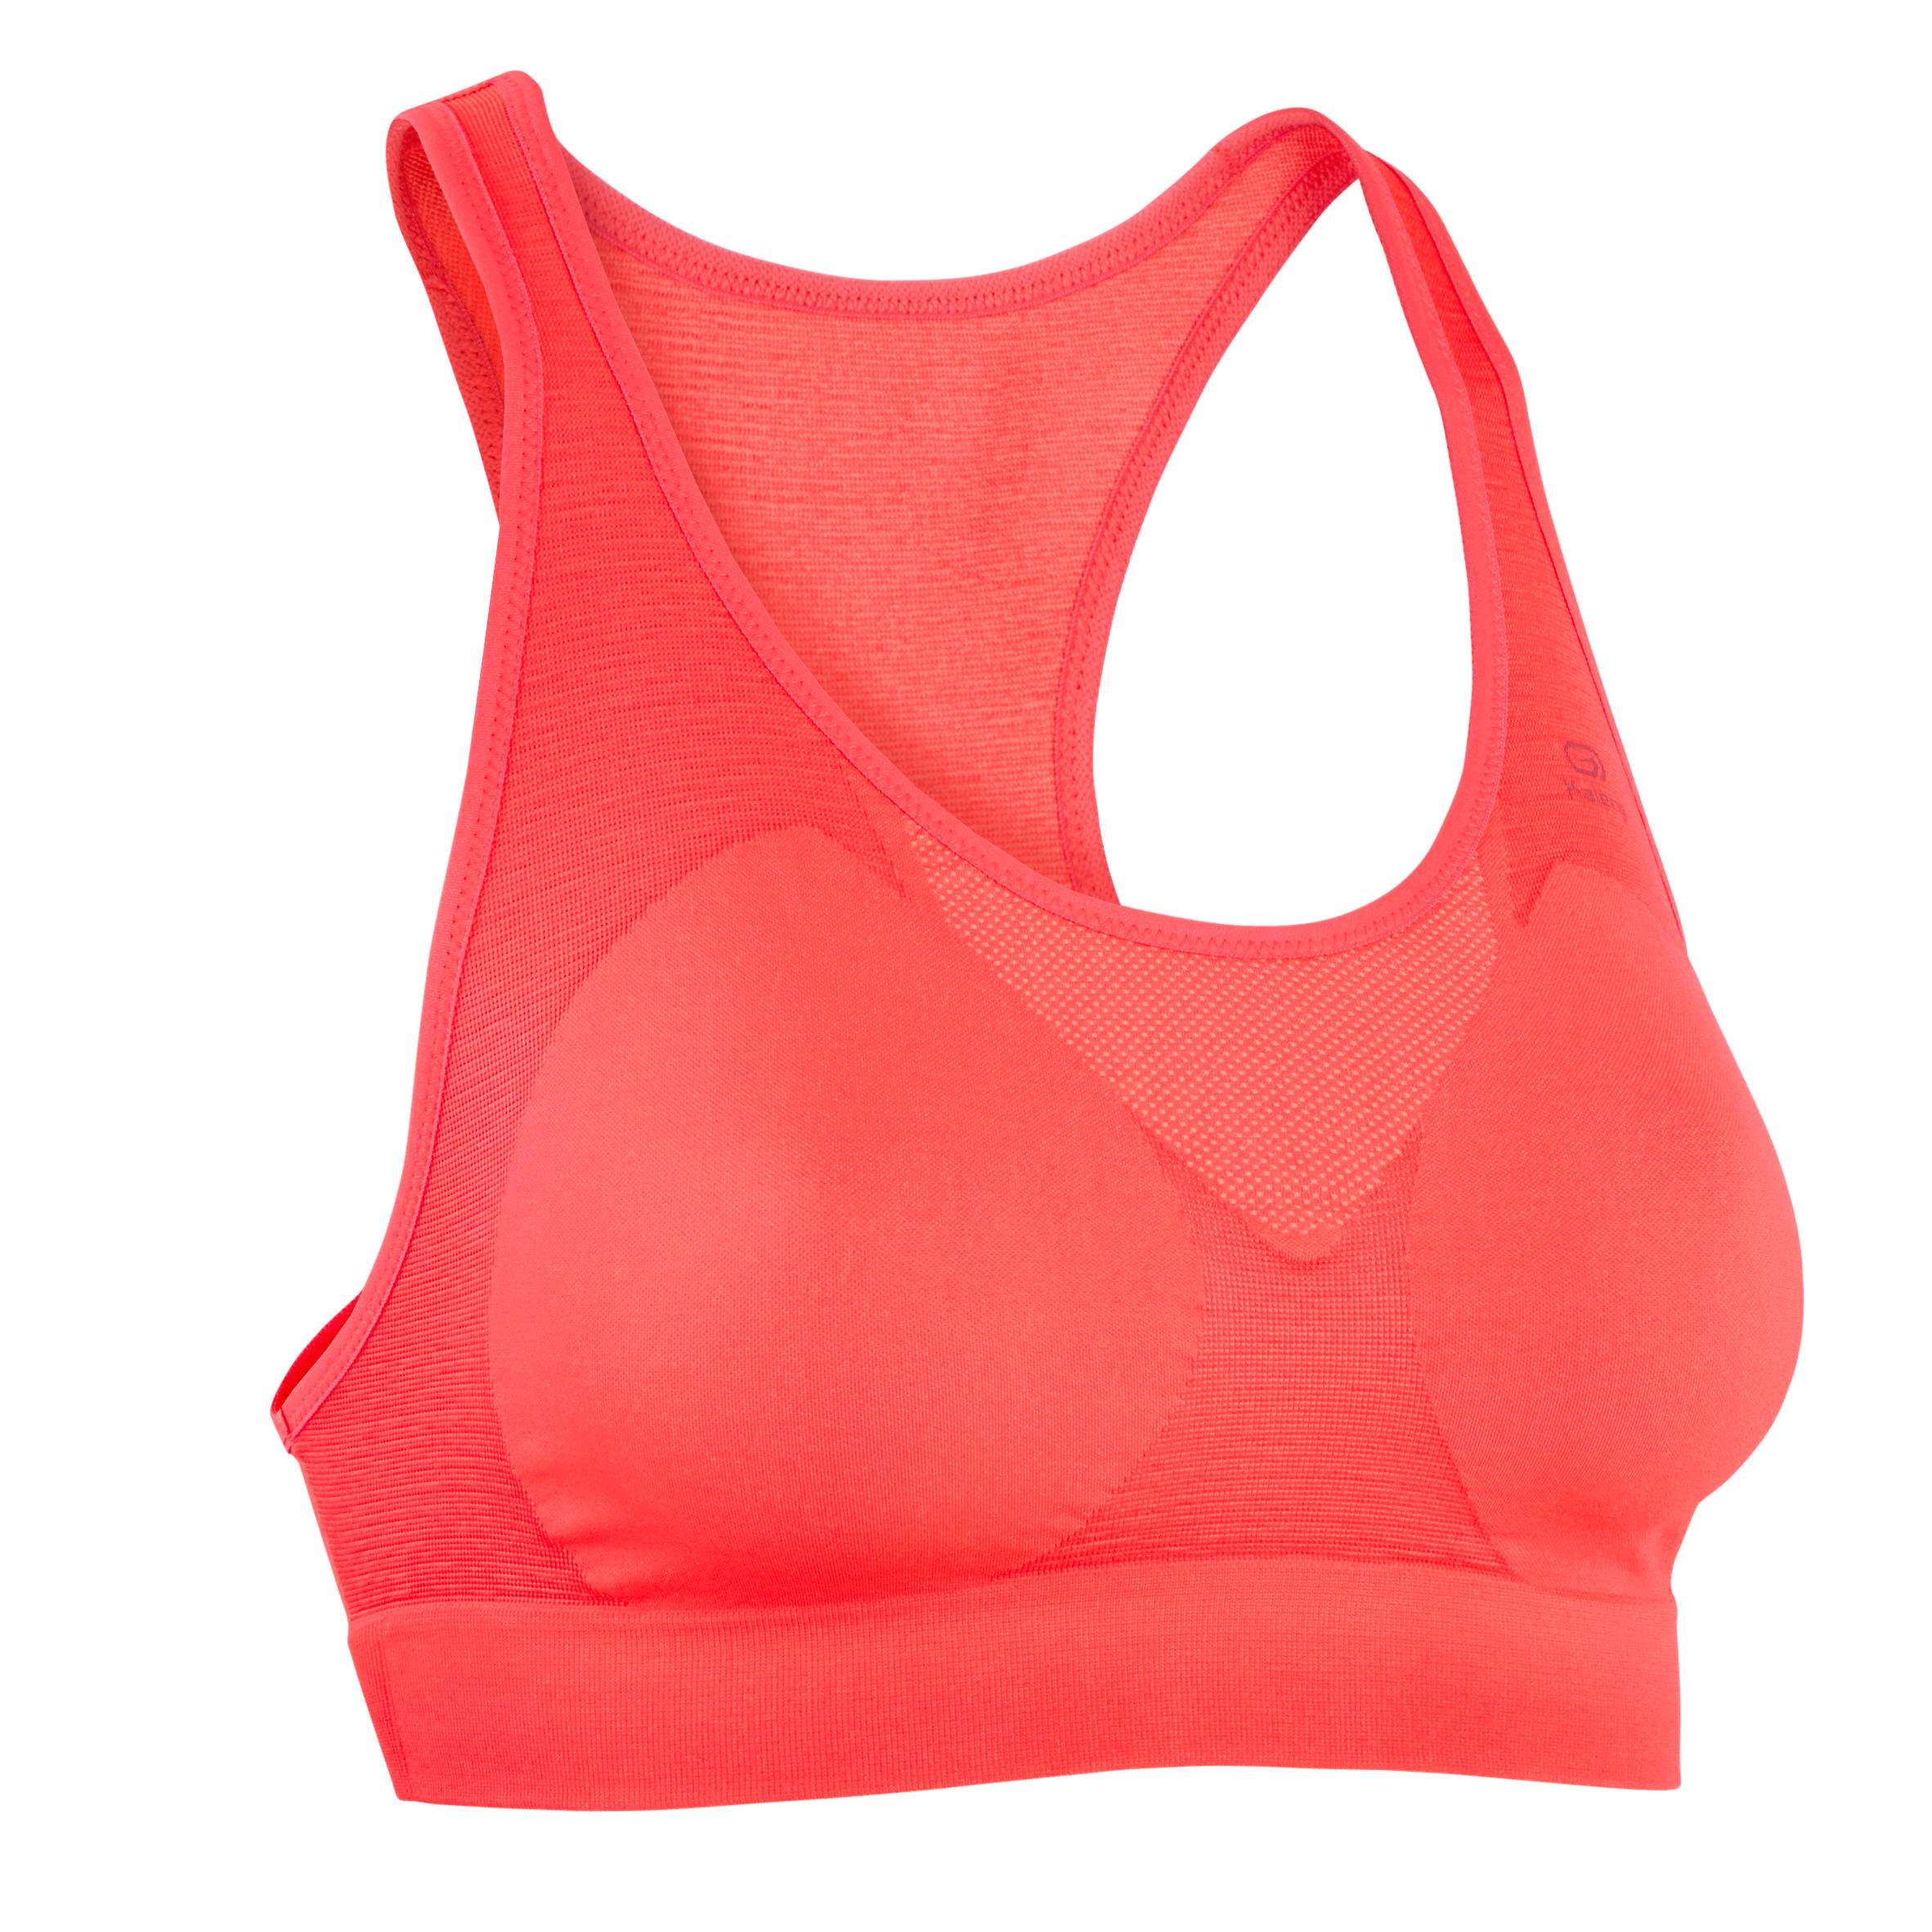 Dorina Outrun high impact push-up sports bra in neon coral